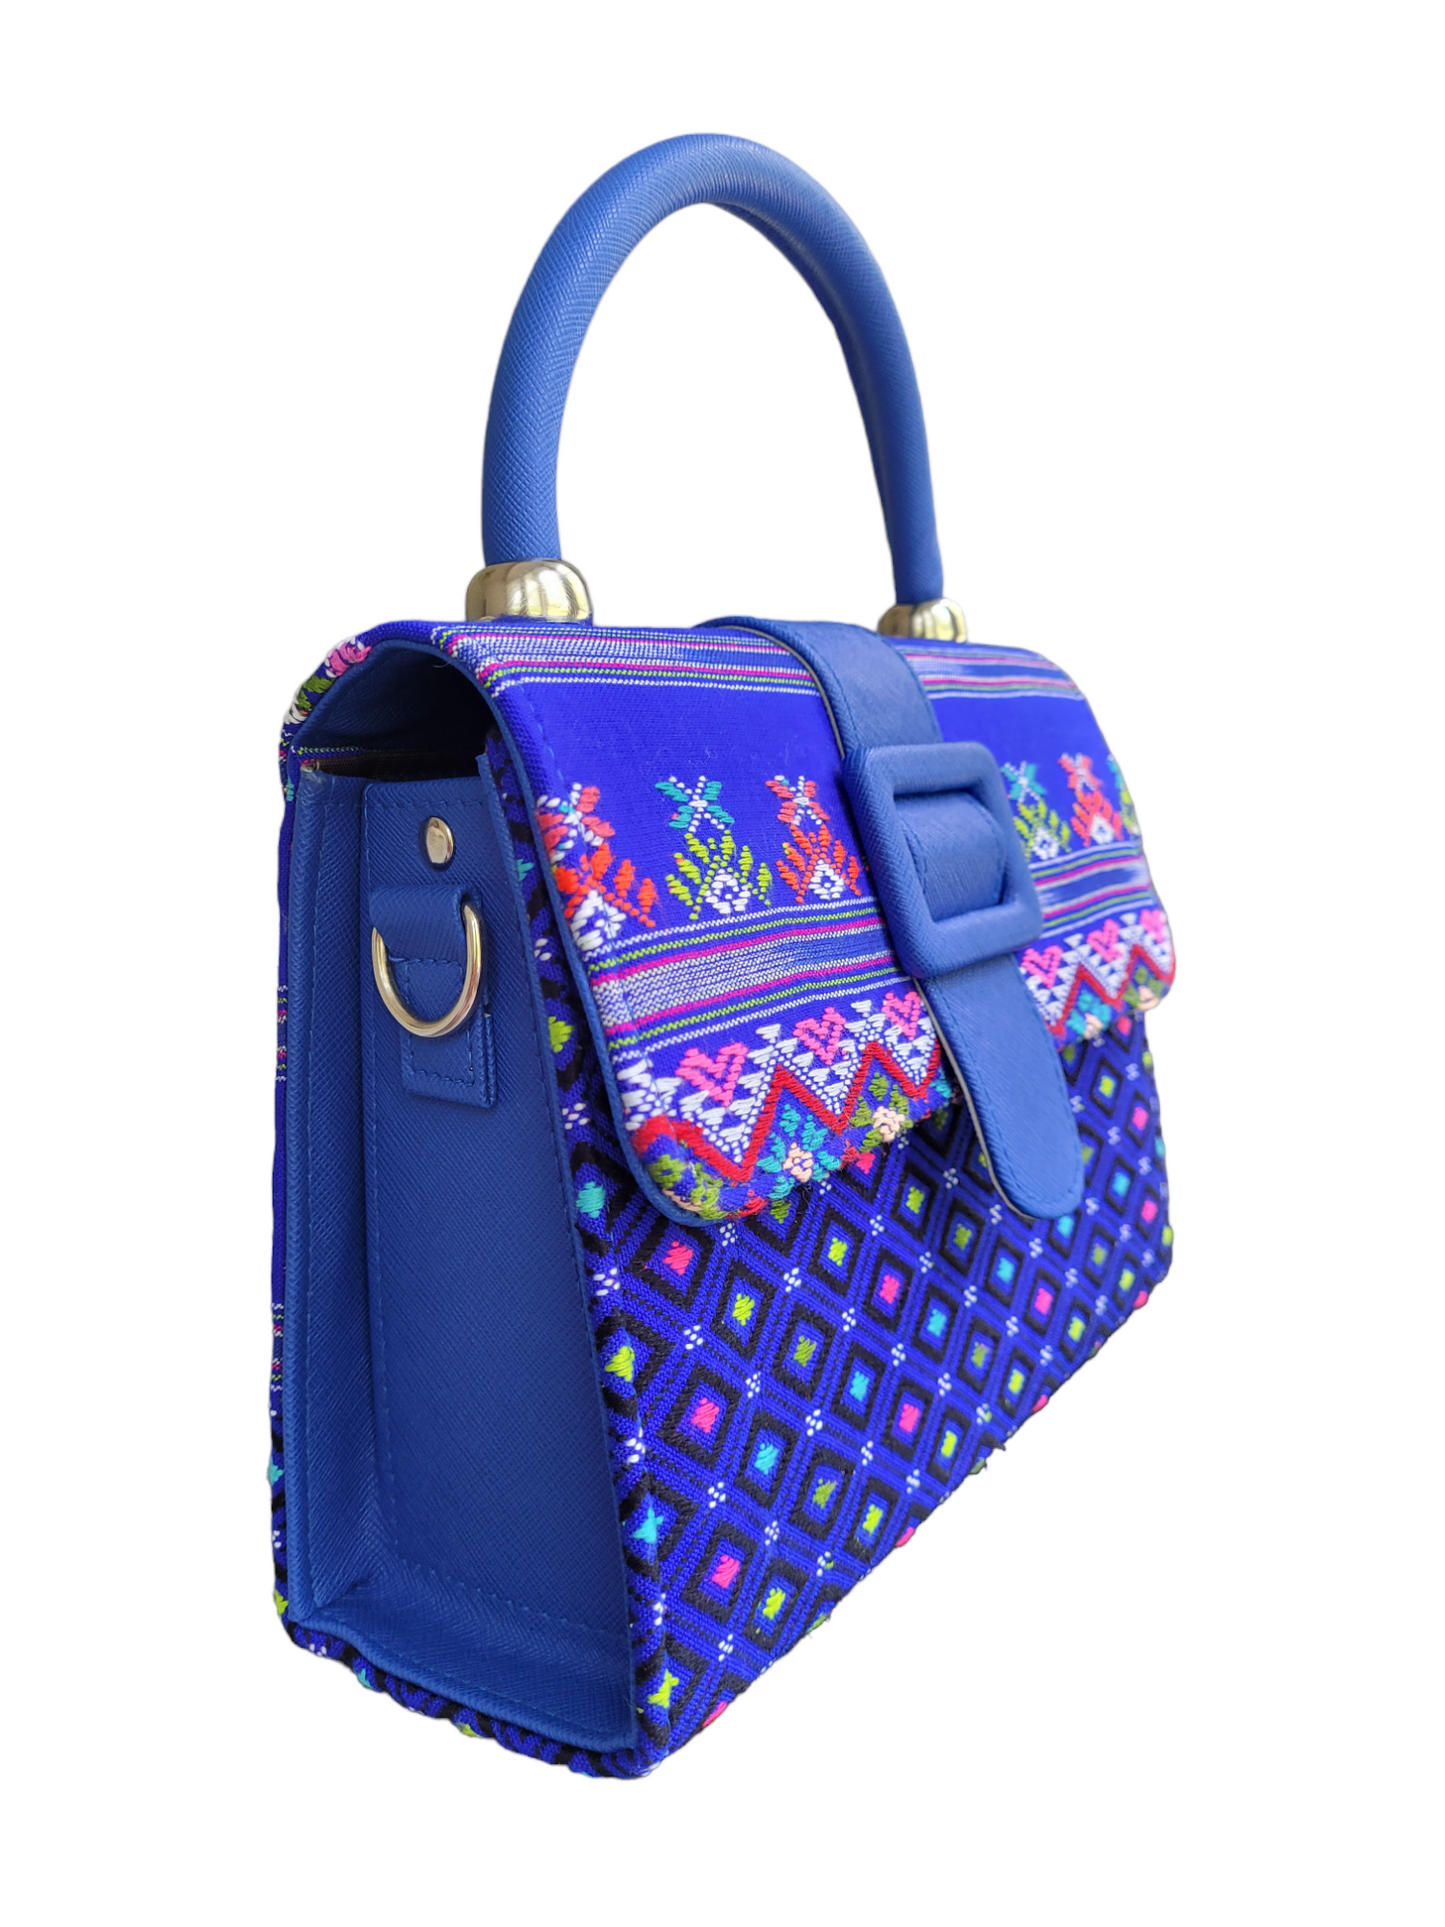 Geometric Design 2 Handbags